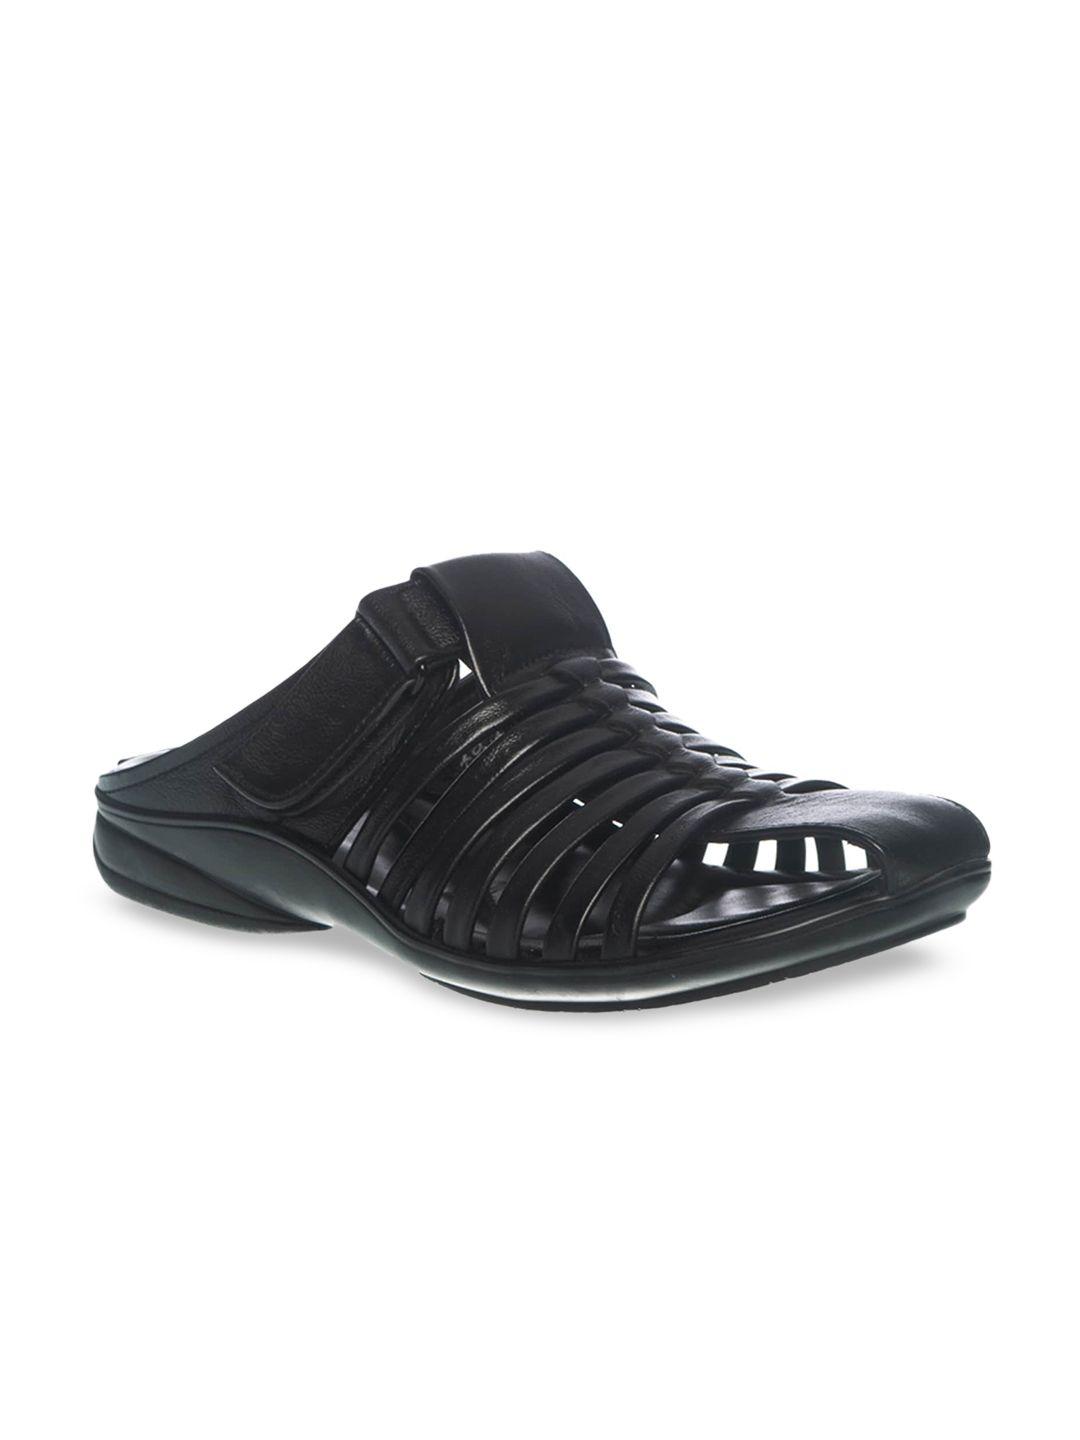 khadims men black leather comfort sandals